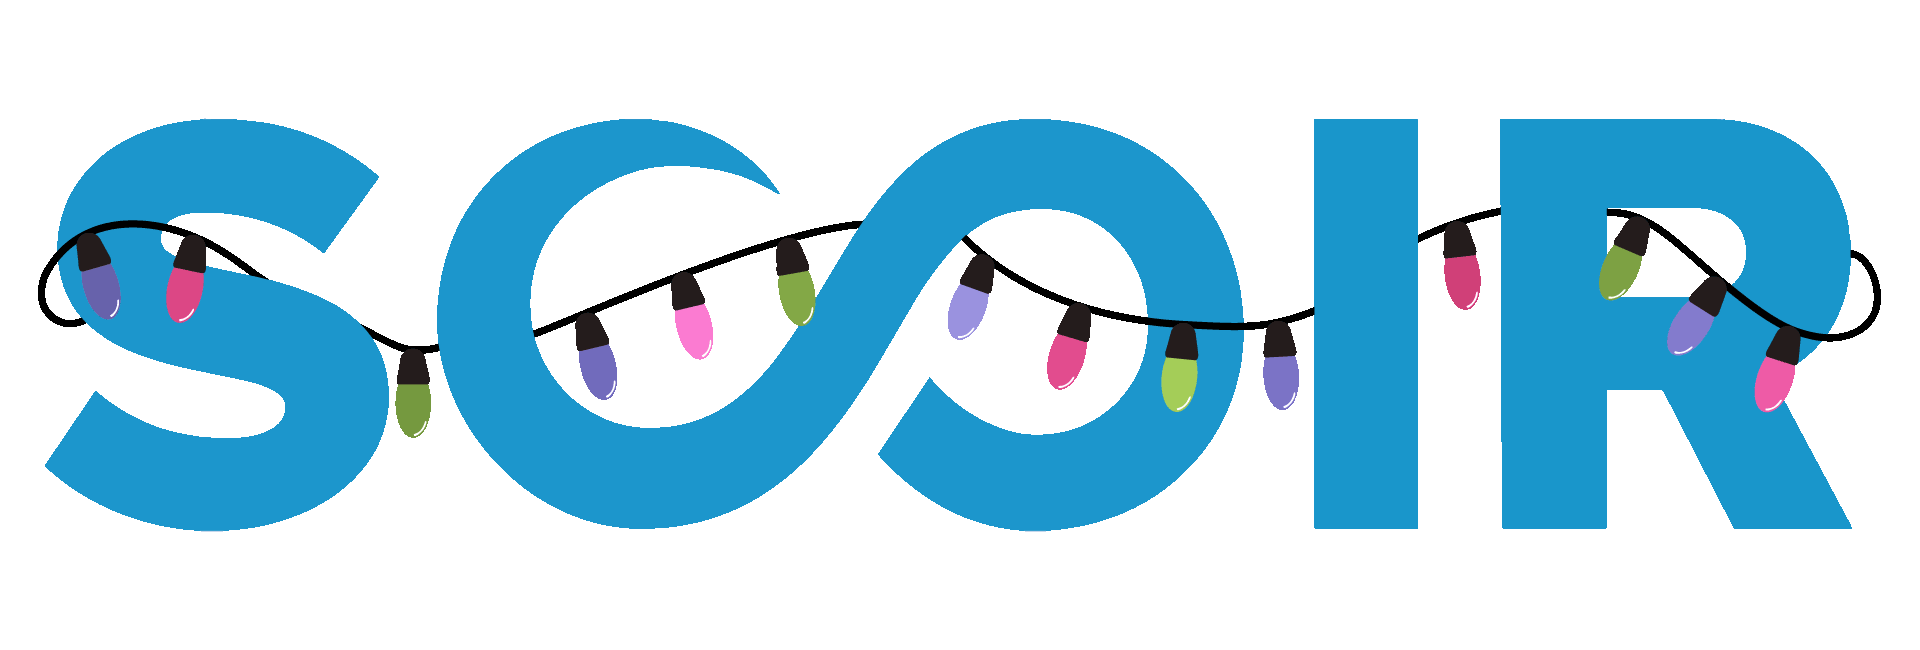 Scoir_Holiday_Logo-(1)